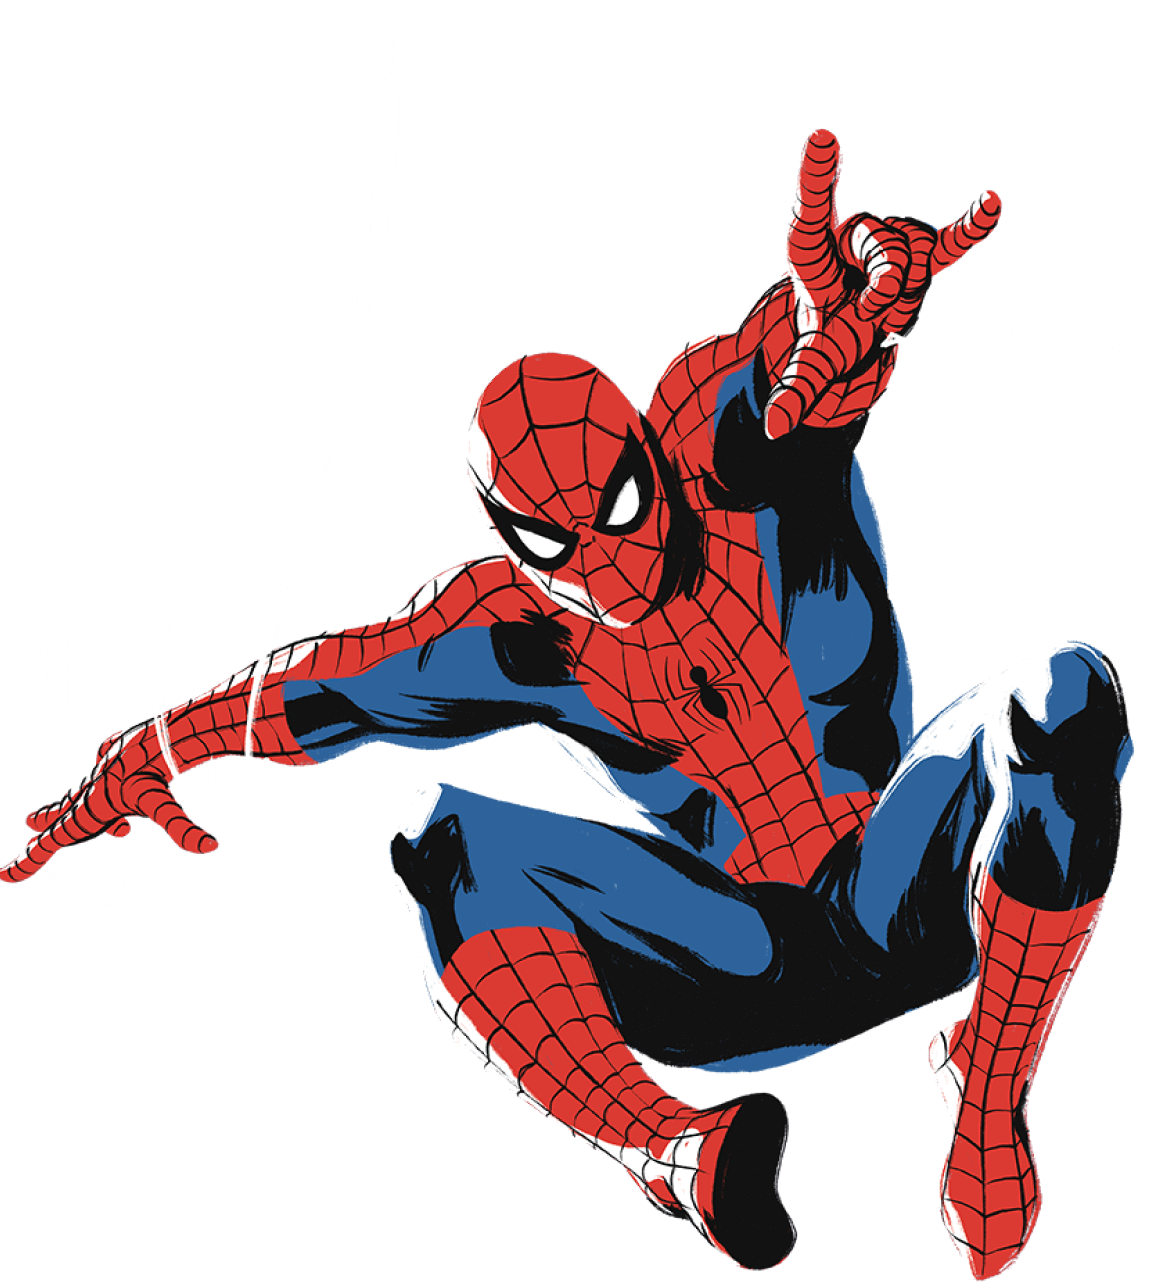 Spider-man jumping - Beyond Amazing Exibition